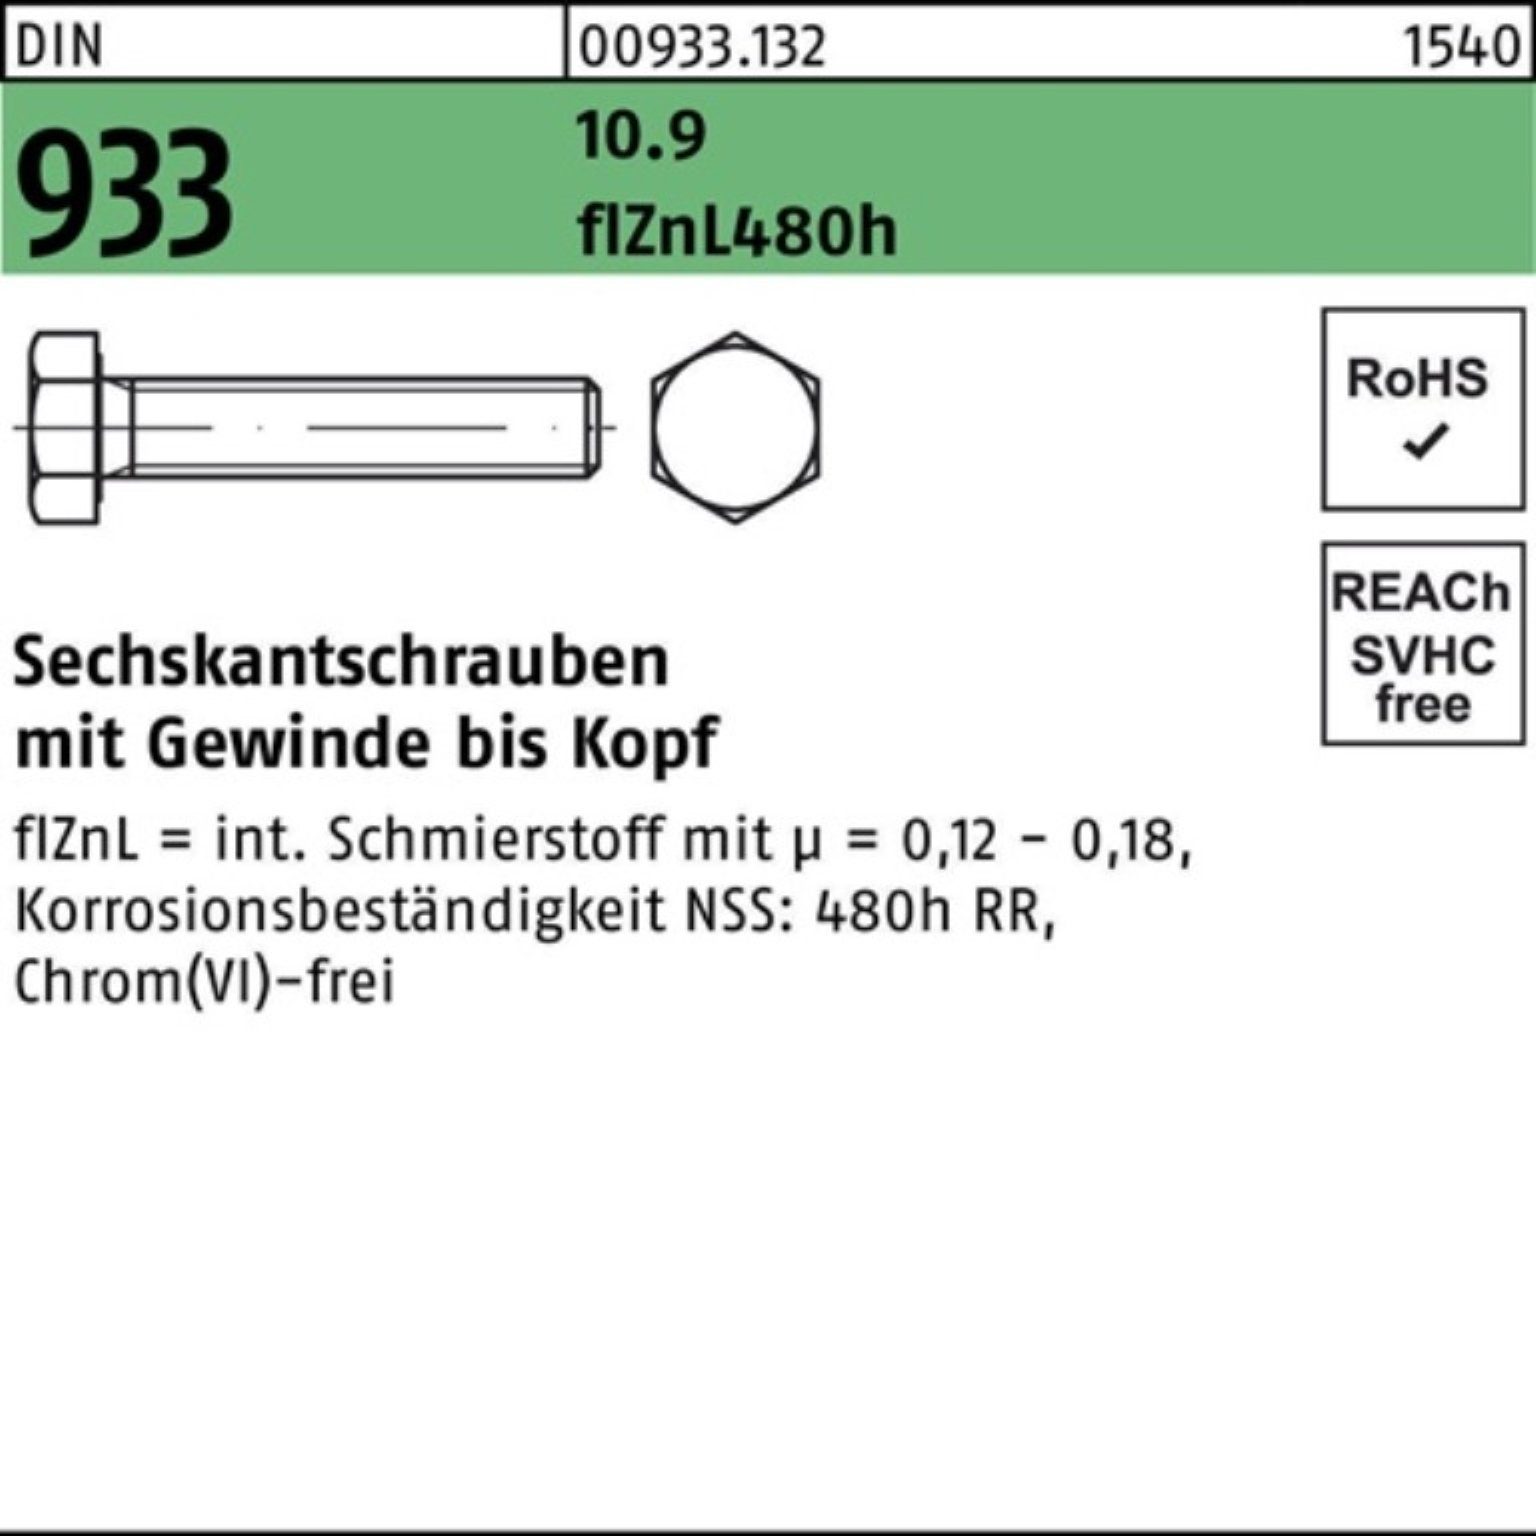 Reyher Sechskantschraube Sechskantschraube 10.9 22 Pack VG M8x flZnL/nc/x/x/480h DIN 200er 933